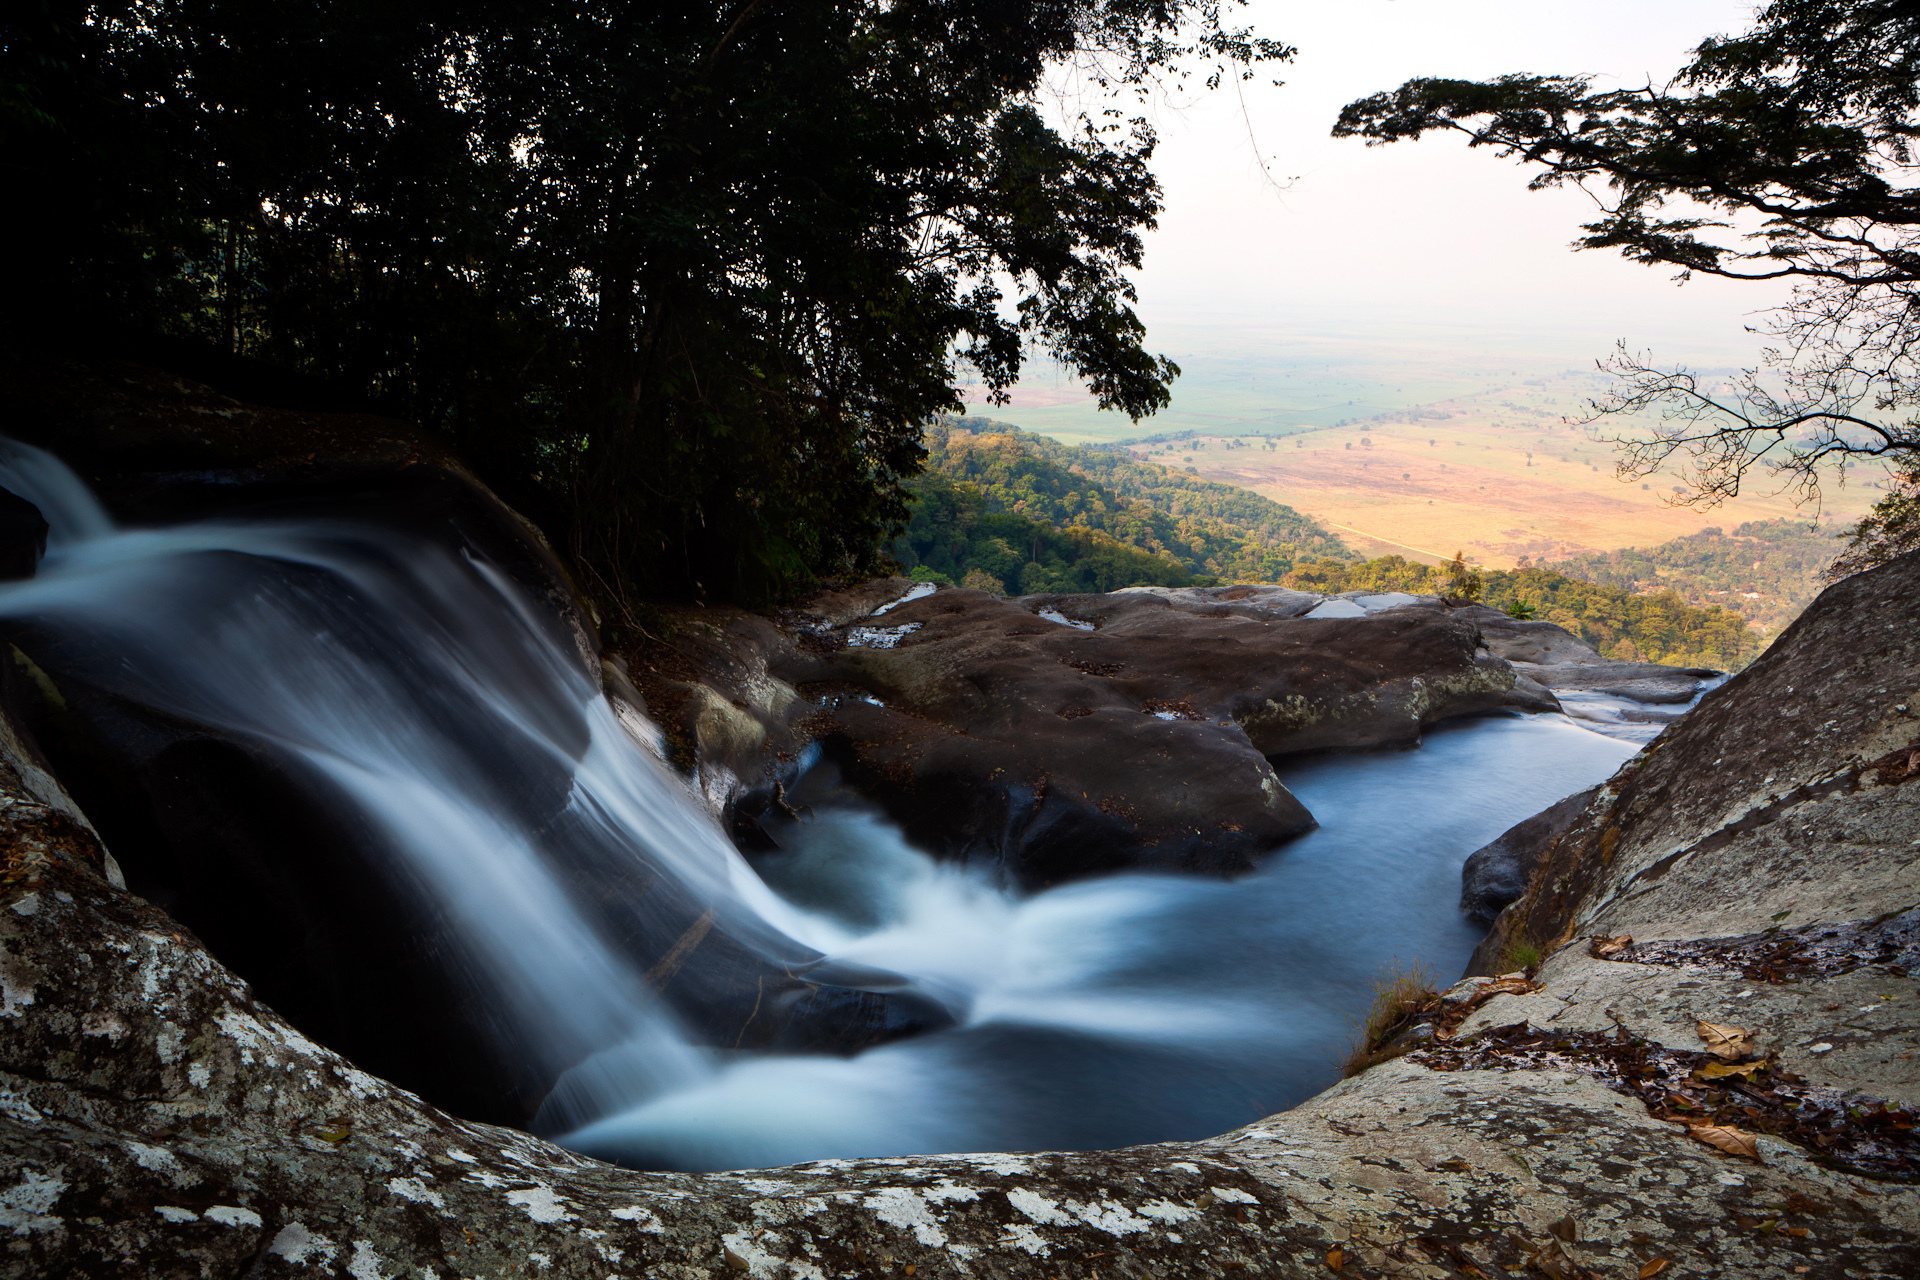 Sanje Waterfall in Udzungwa National Park, Tanzania, overlooks farmland that depends on its water.